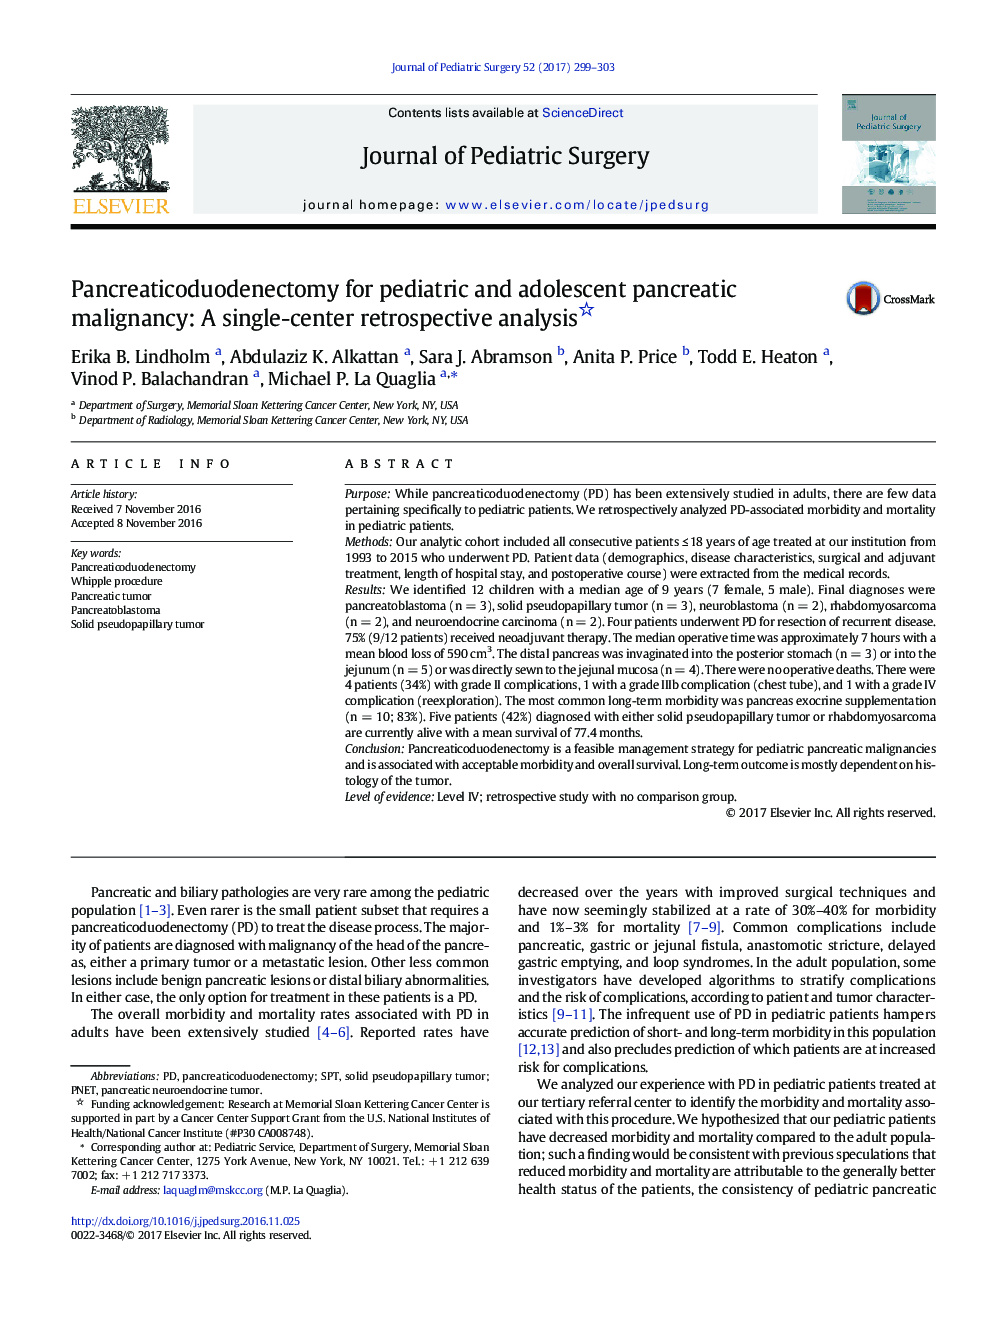 BAPS PaperPancreaticoduodenectomy for pediatric and adolescent pancreatic malignancy: A single-center retrospective analysis